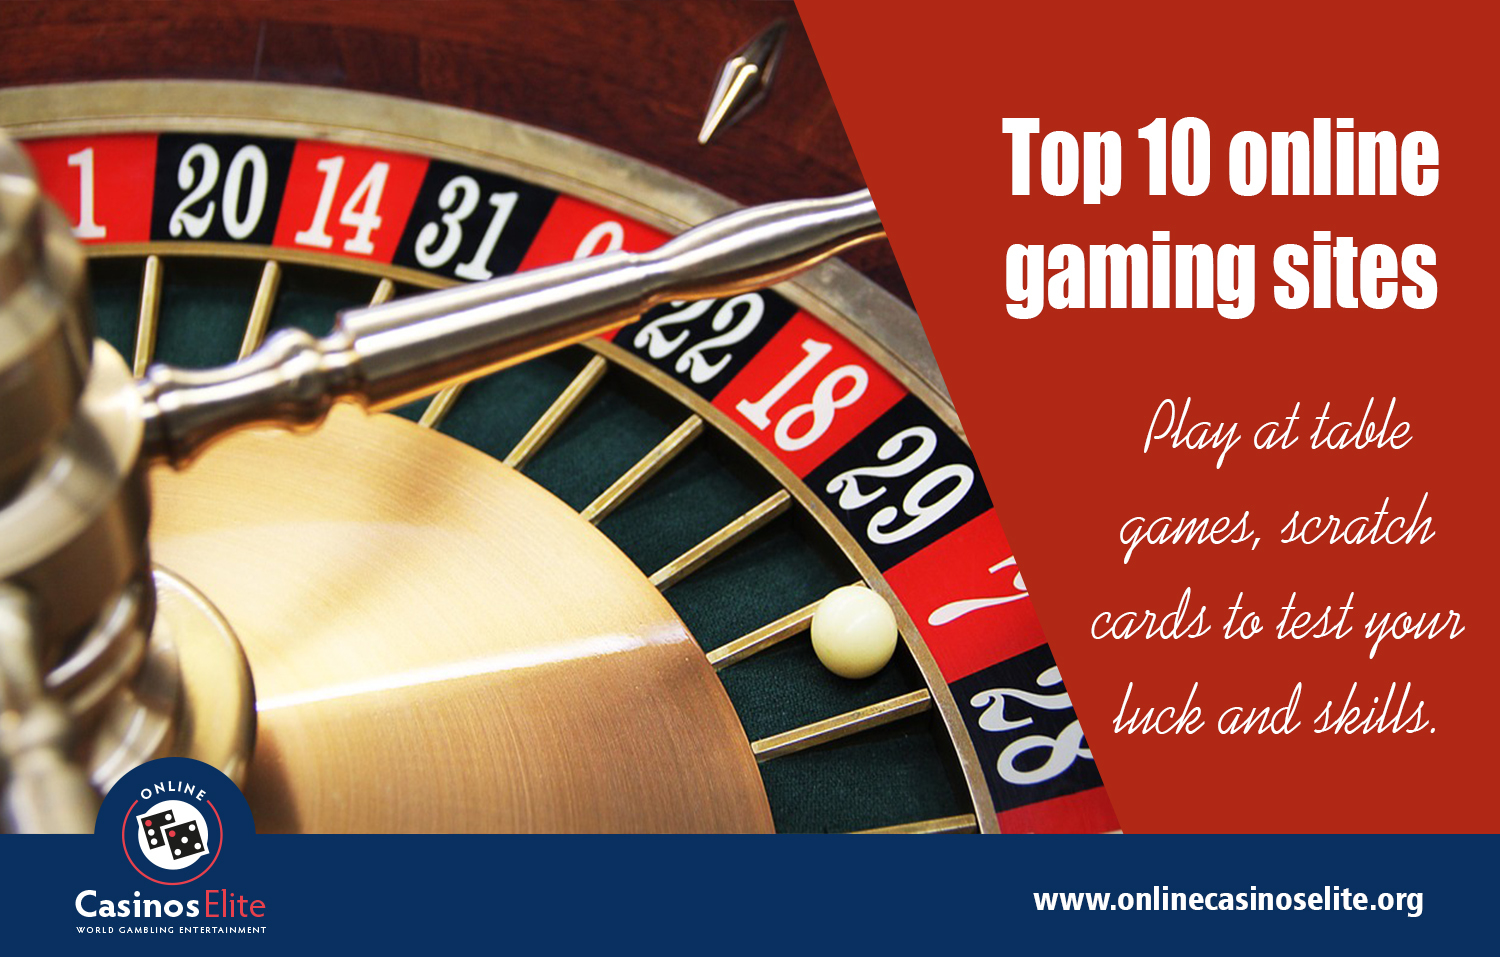 Top 10 online gaming sites